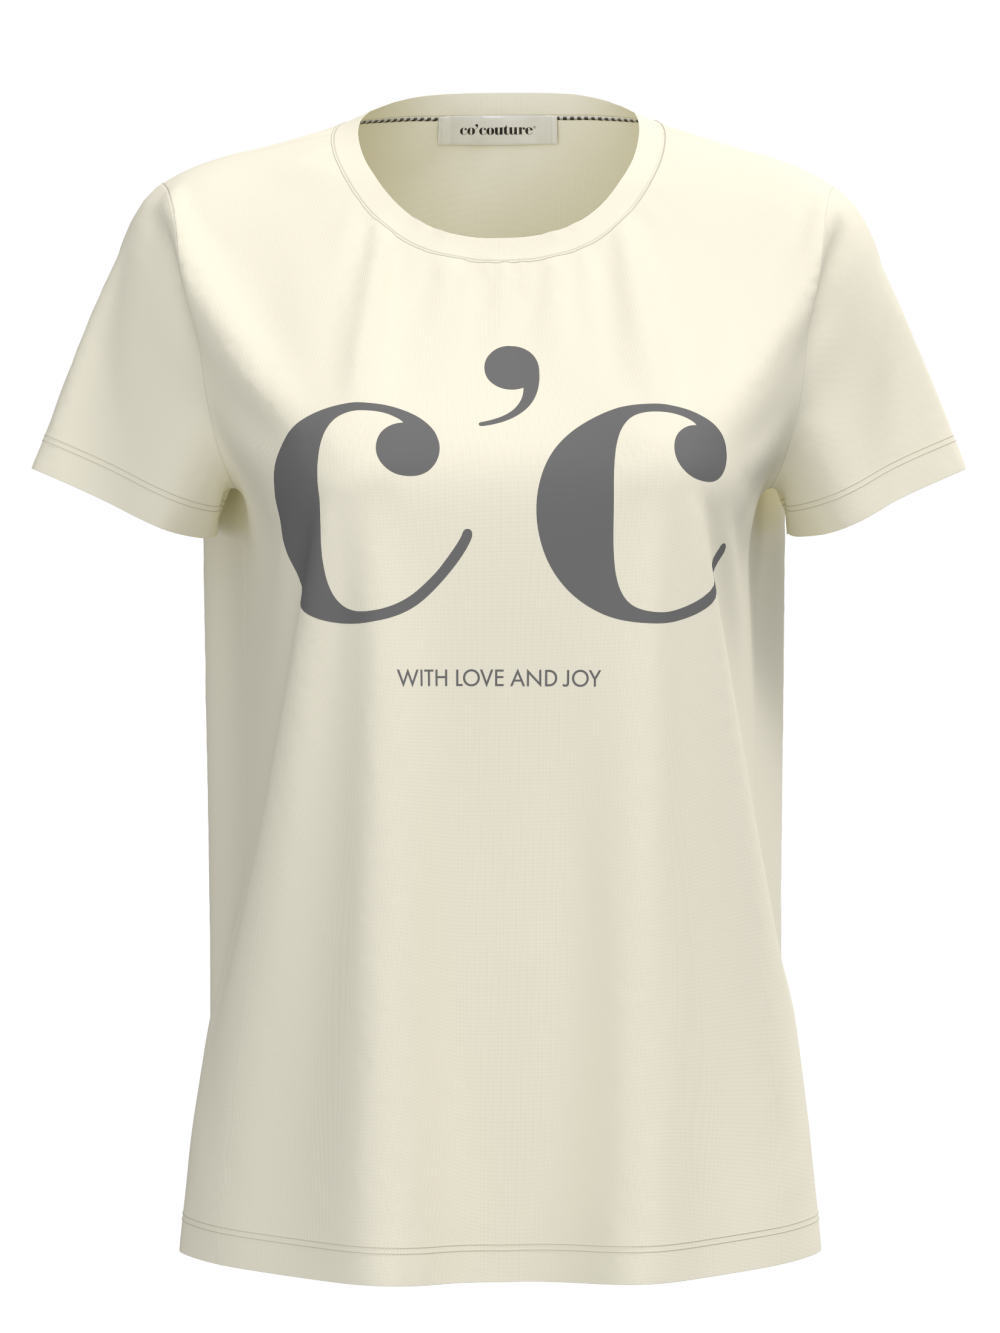 flertal katolsk Normalisering Cc Clean T-shirt fra Co'Couture